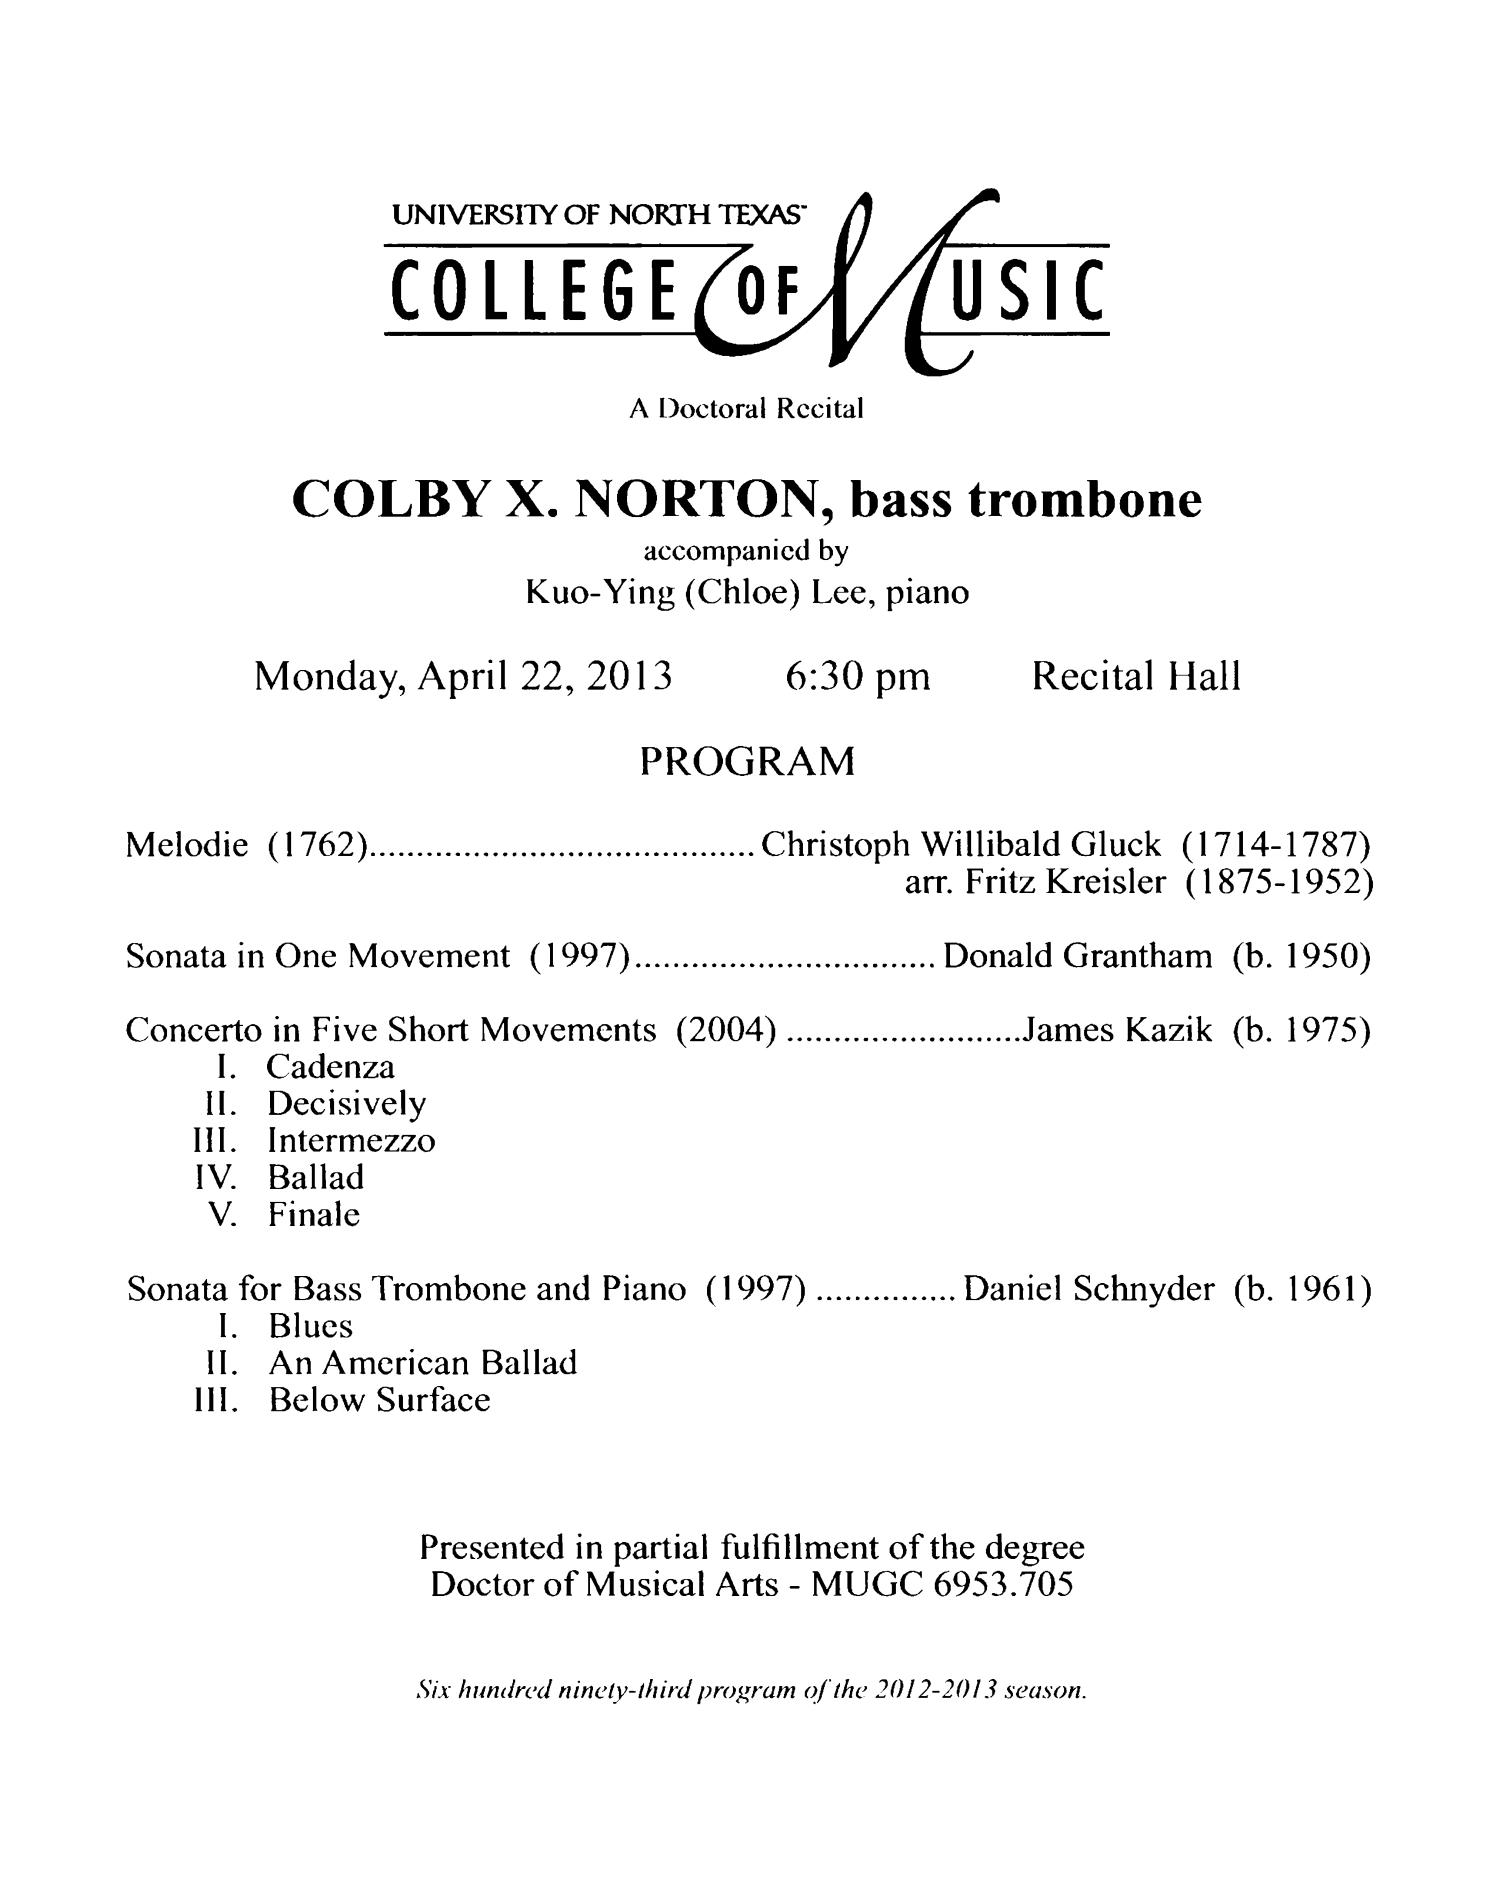 College of Music Program Book 2012-2013: Student Performances, Volume 2
                                                
                                                    323
                                                